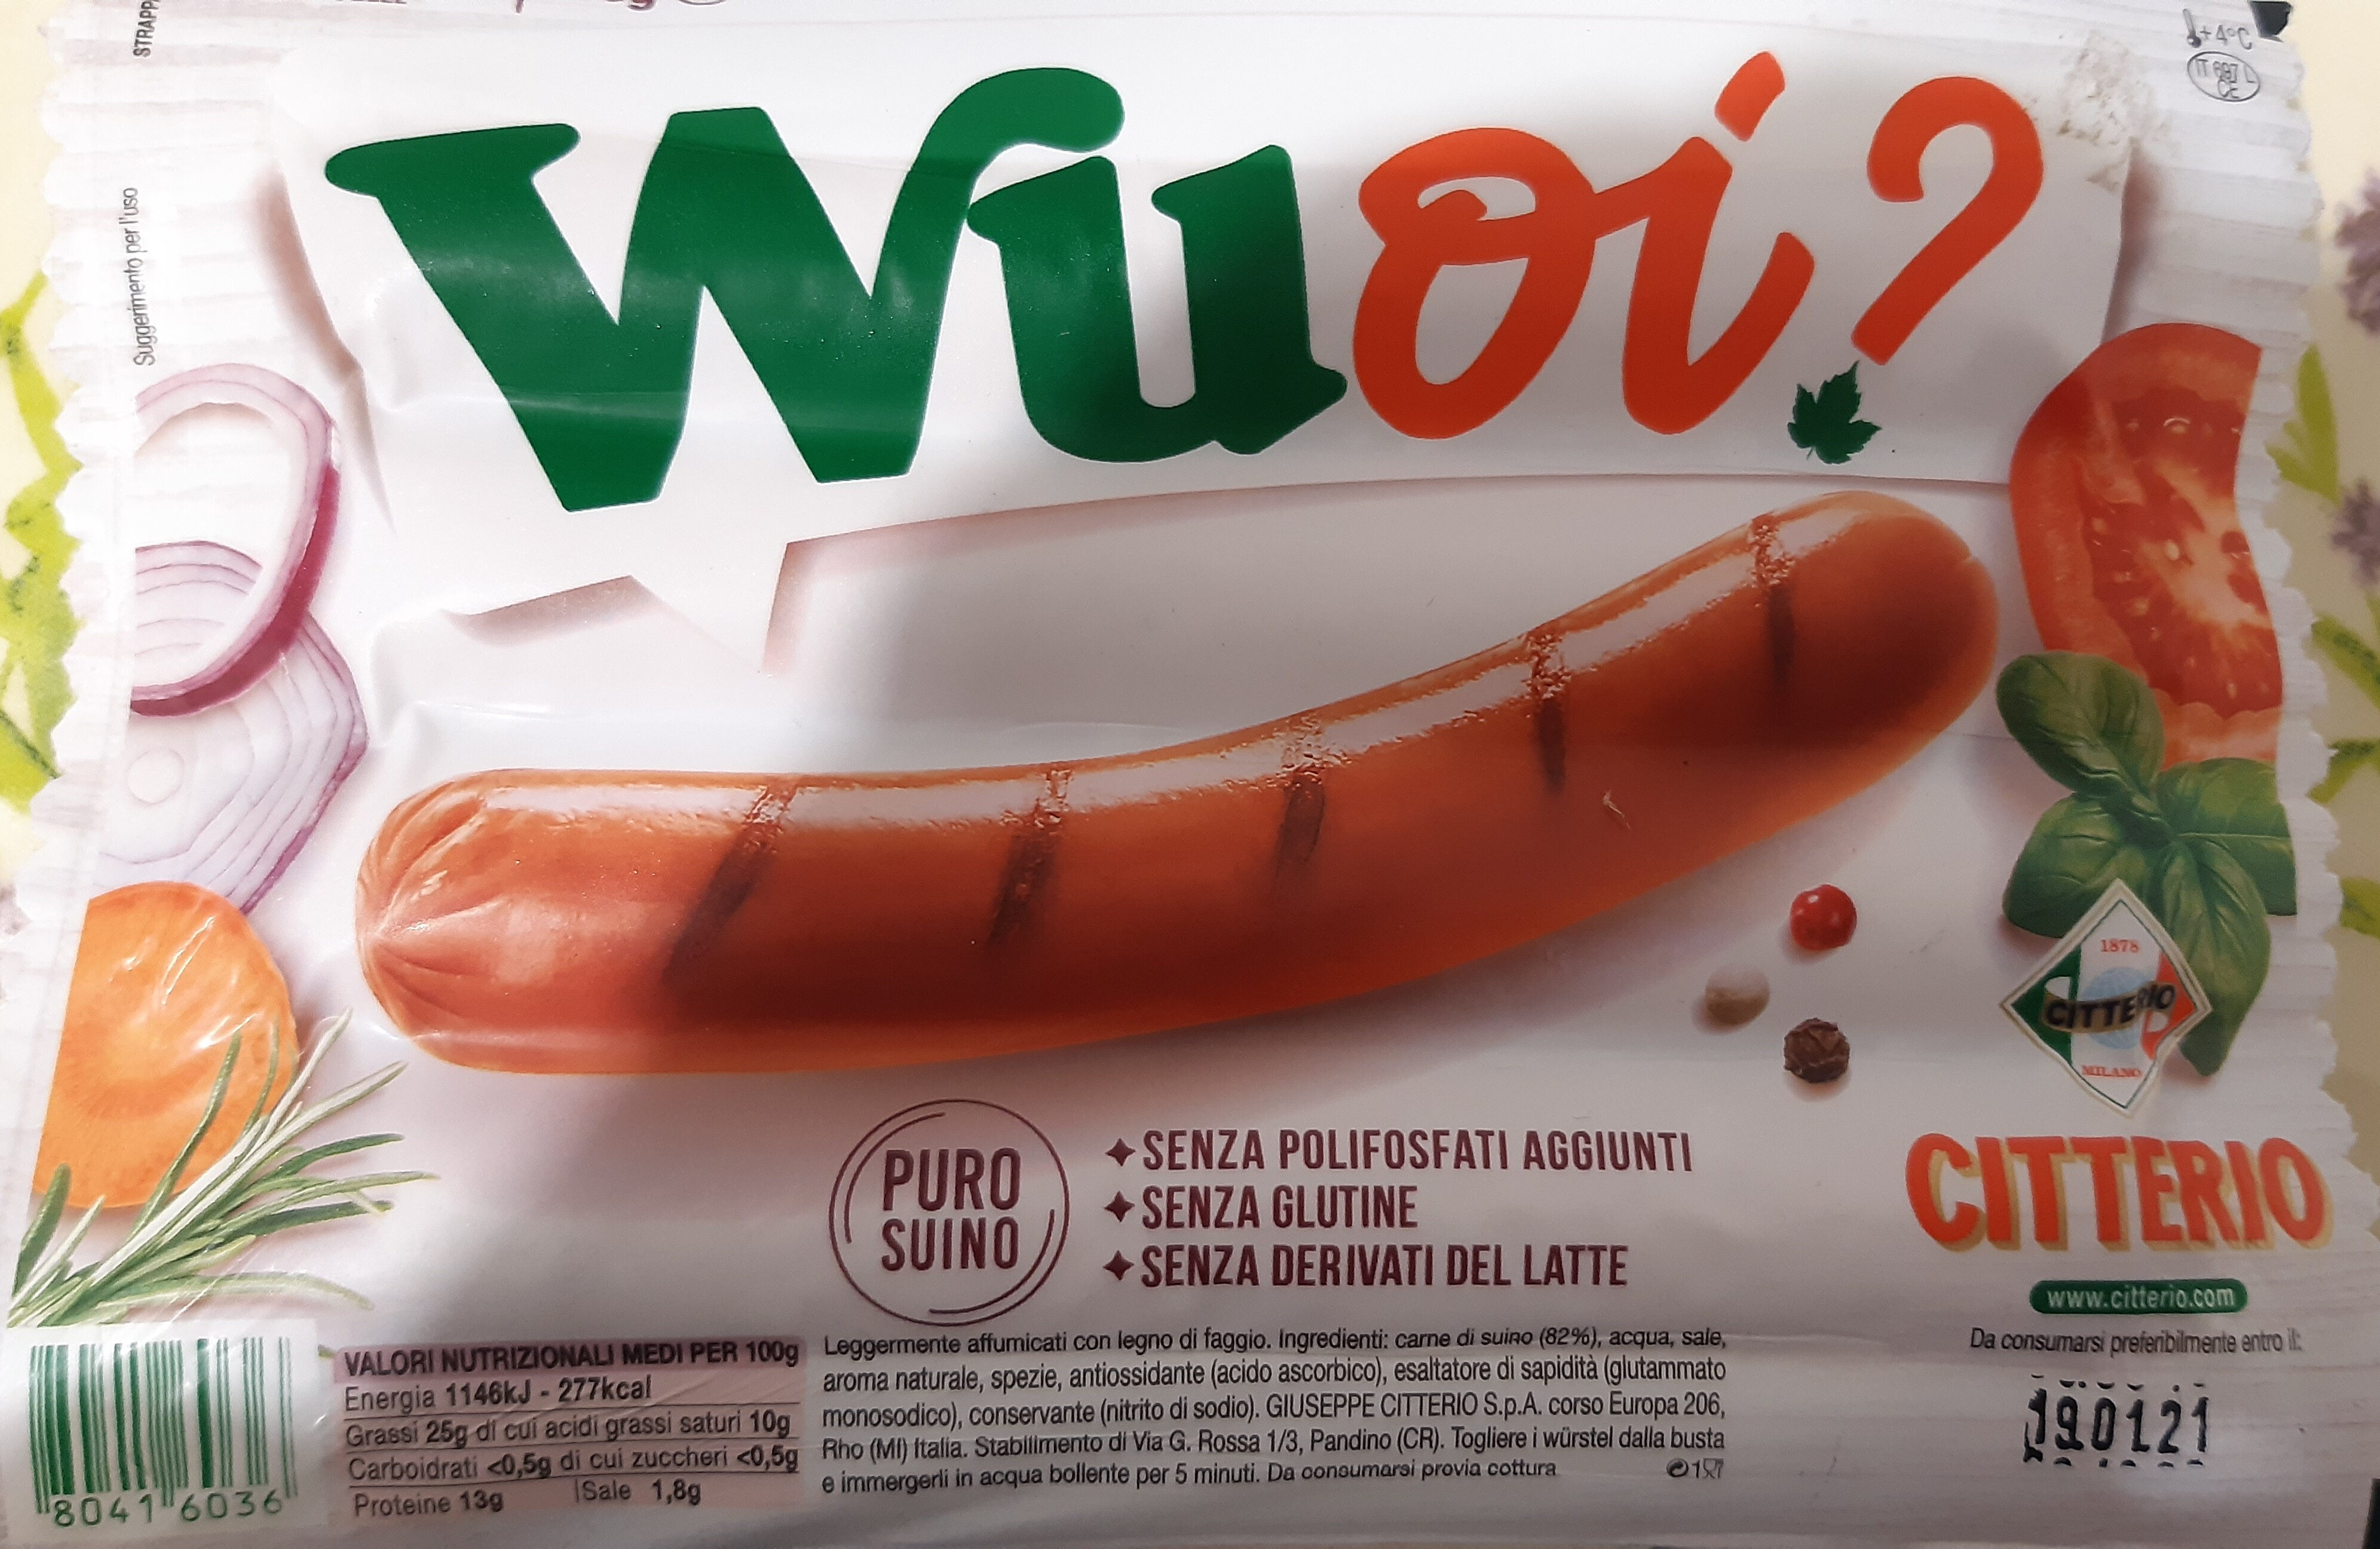 Wuoi? 4 Maxi Würstel Senza Pelle - Product - it